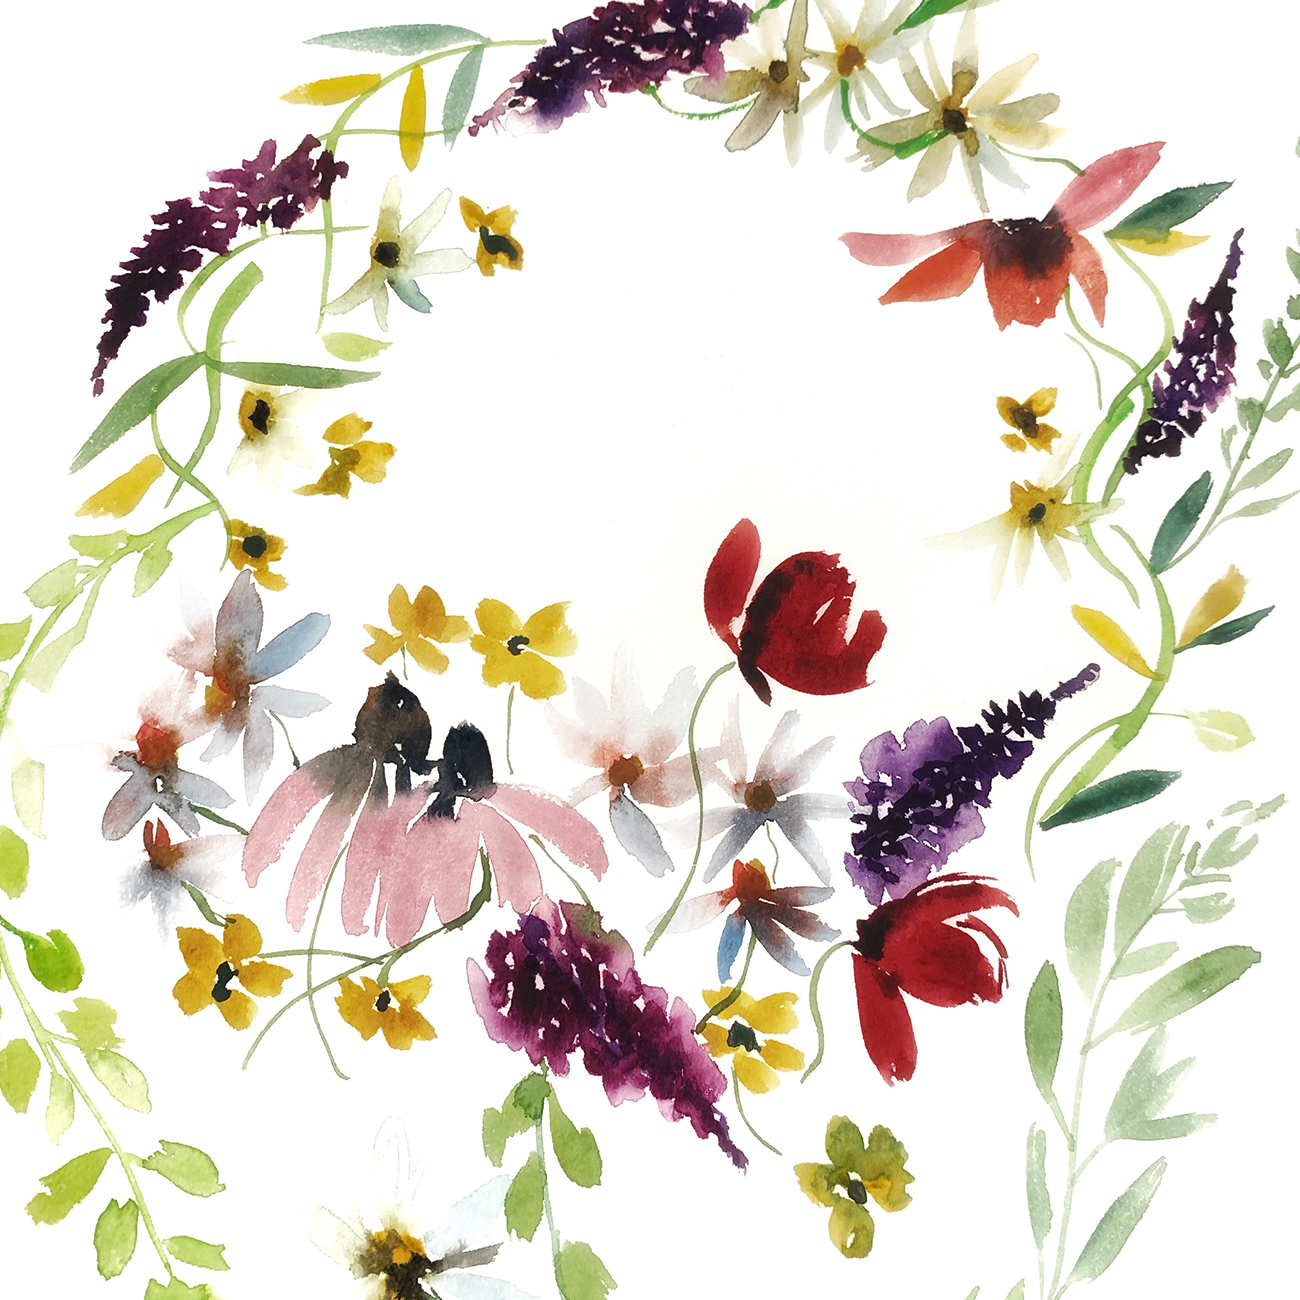 Wildblumen malen, florales Watercolor